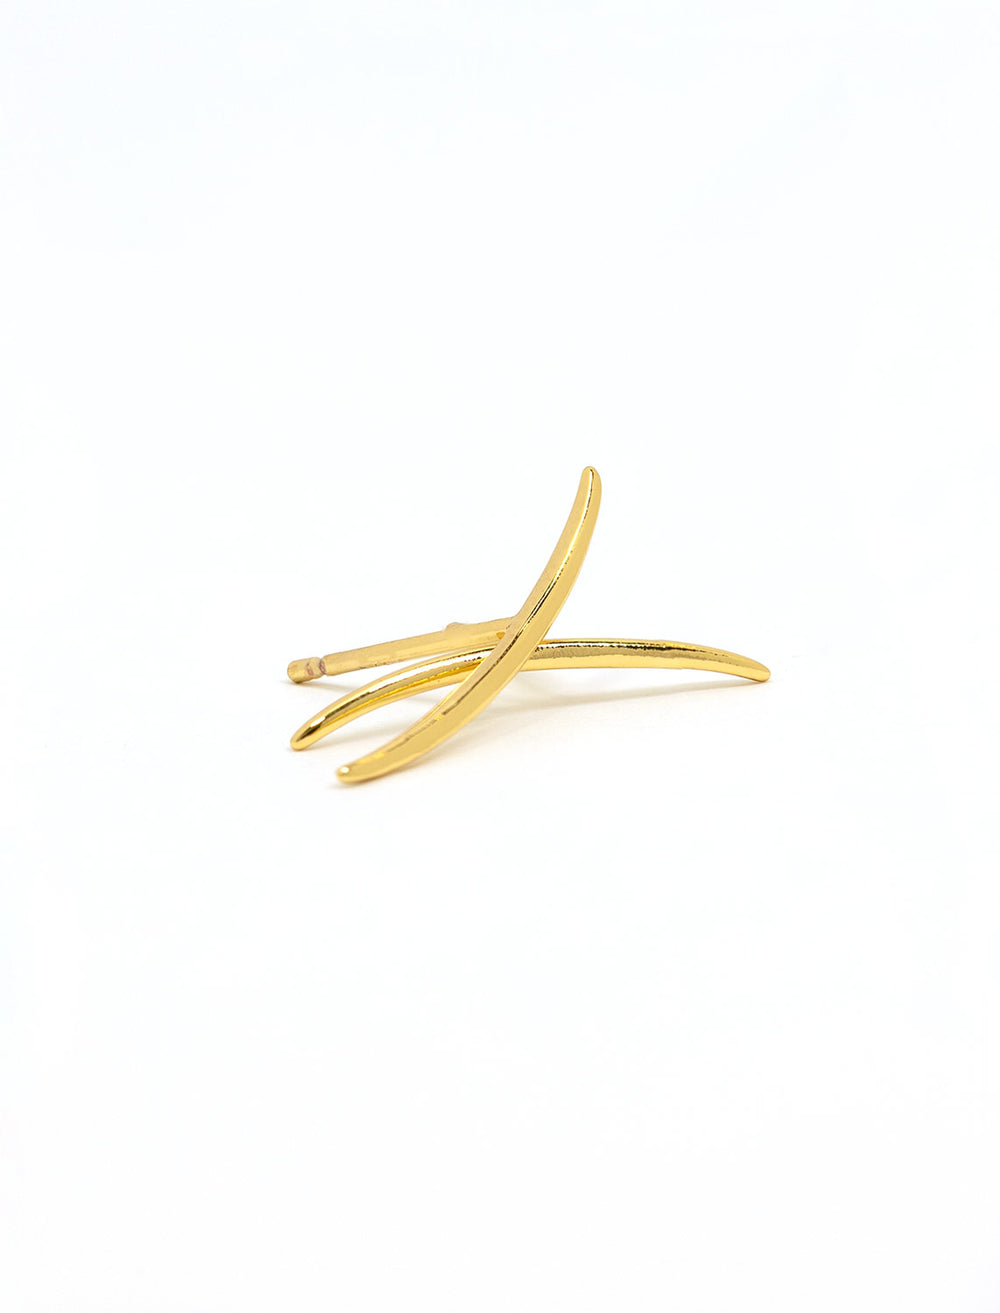 Stylized laydown of Tai Jewelry's Gold Curved Bar Studs.